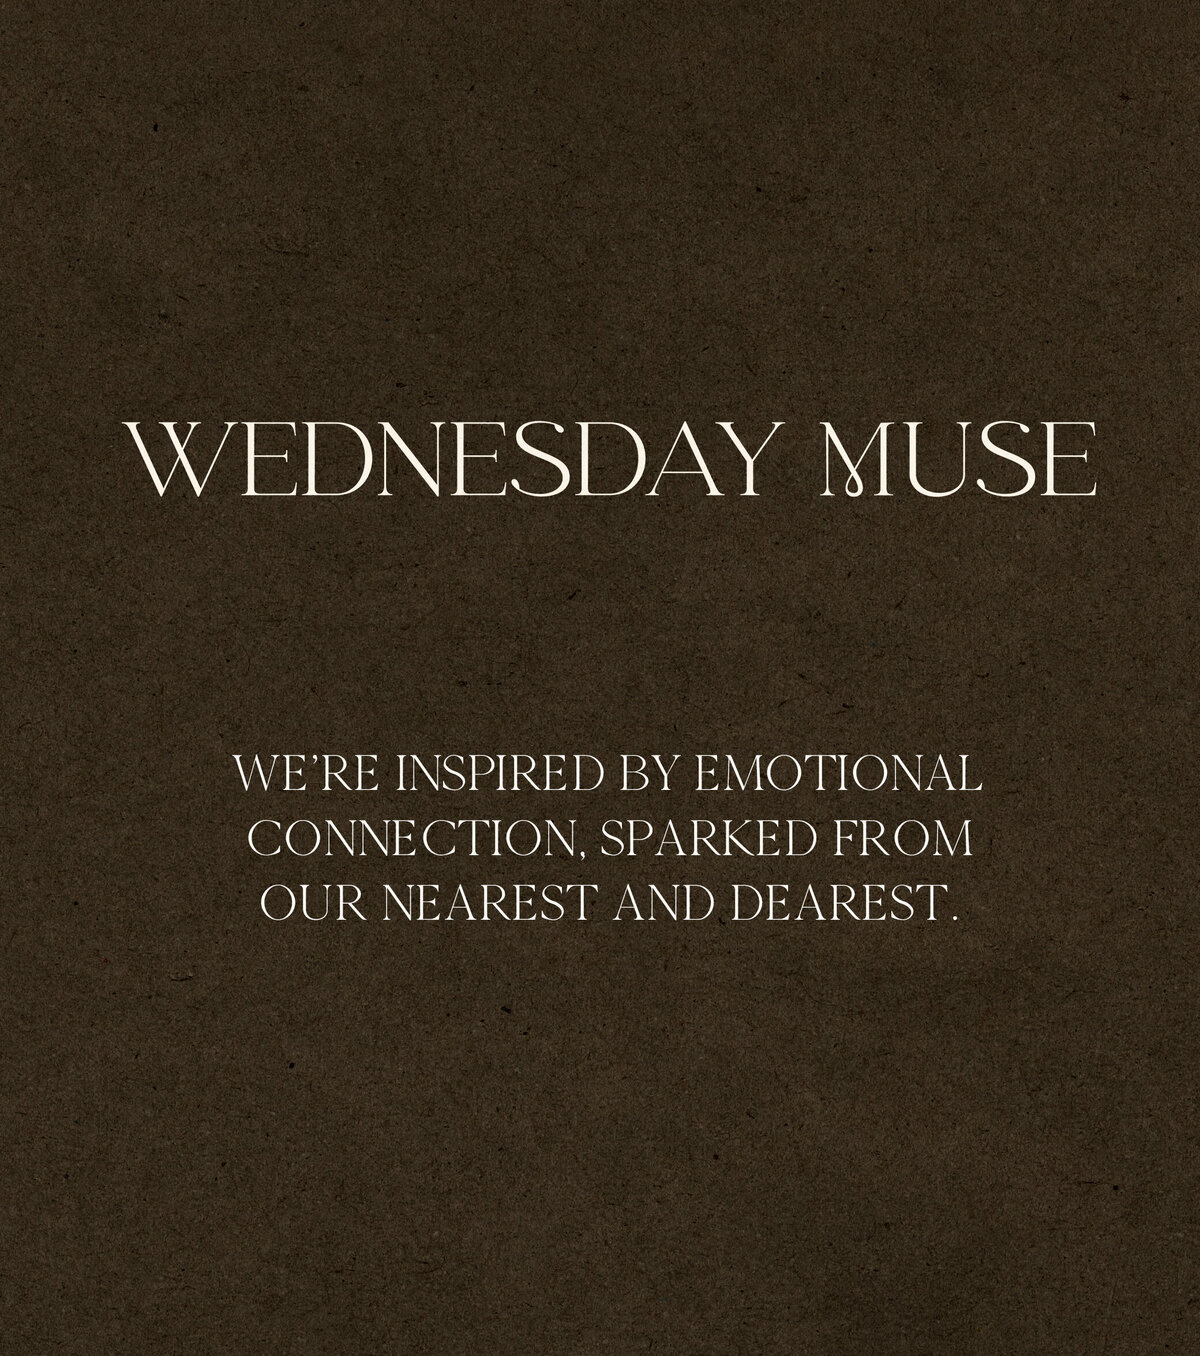 Wednesday-MuseArtboard 1 copy 2